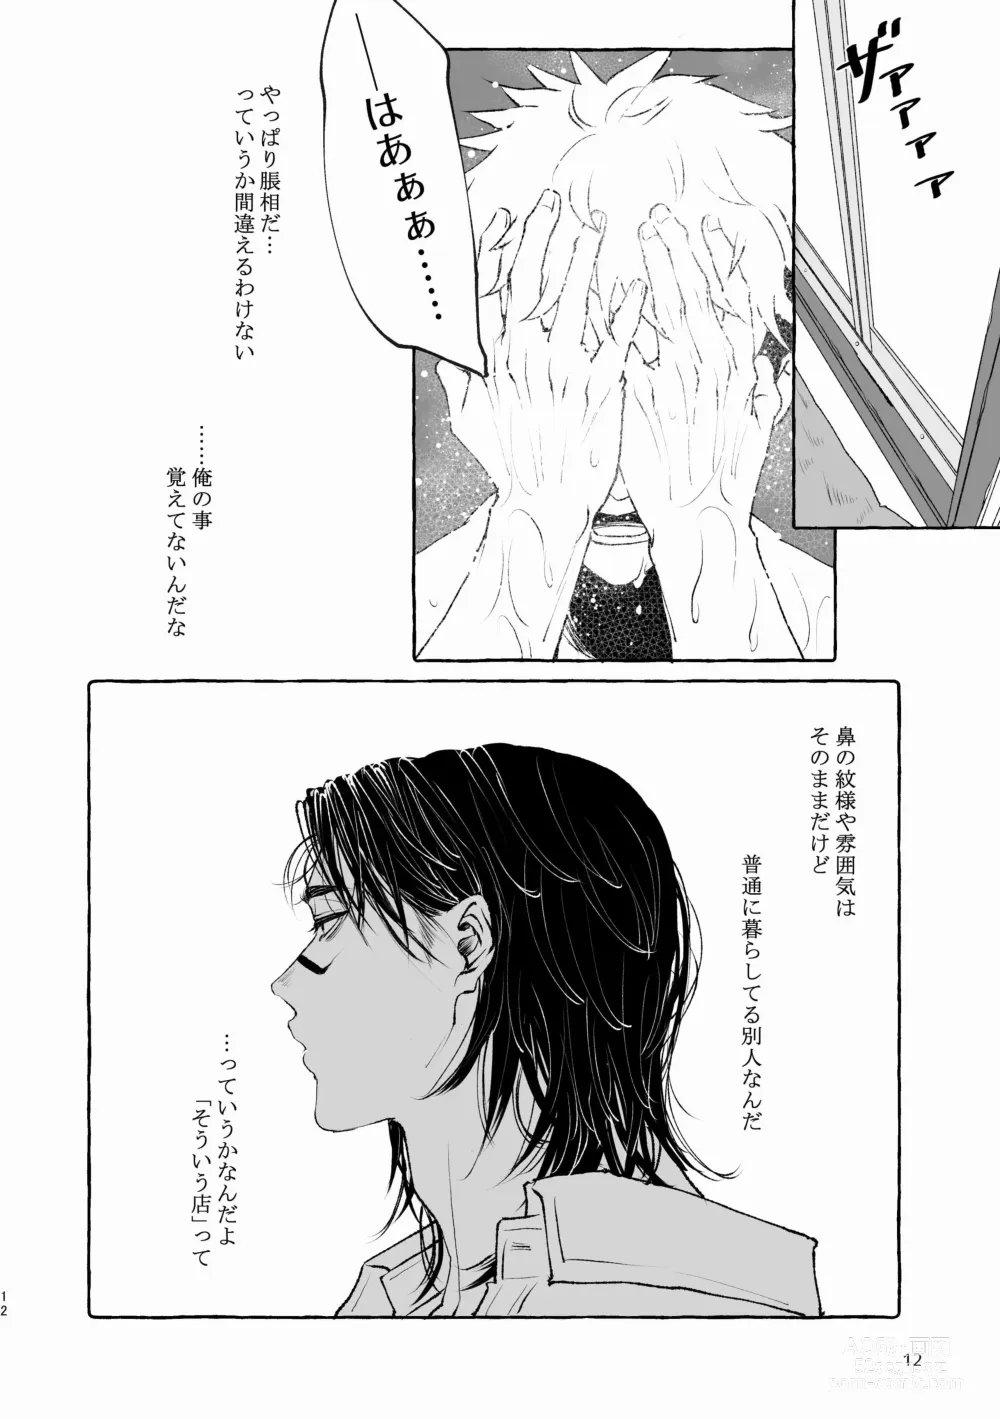 Page 12 of doujinshi Inryoku no Petrichor